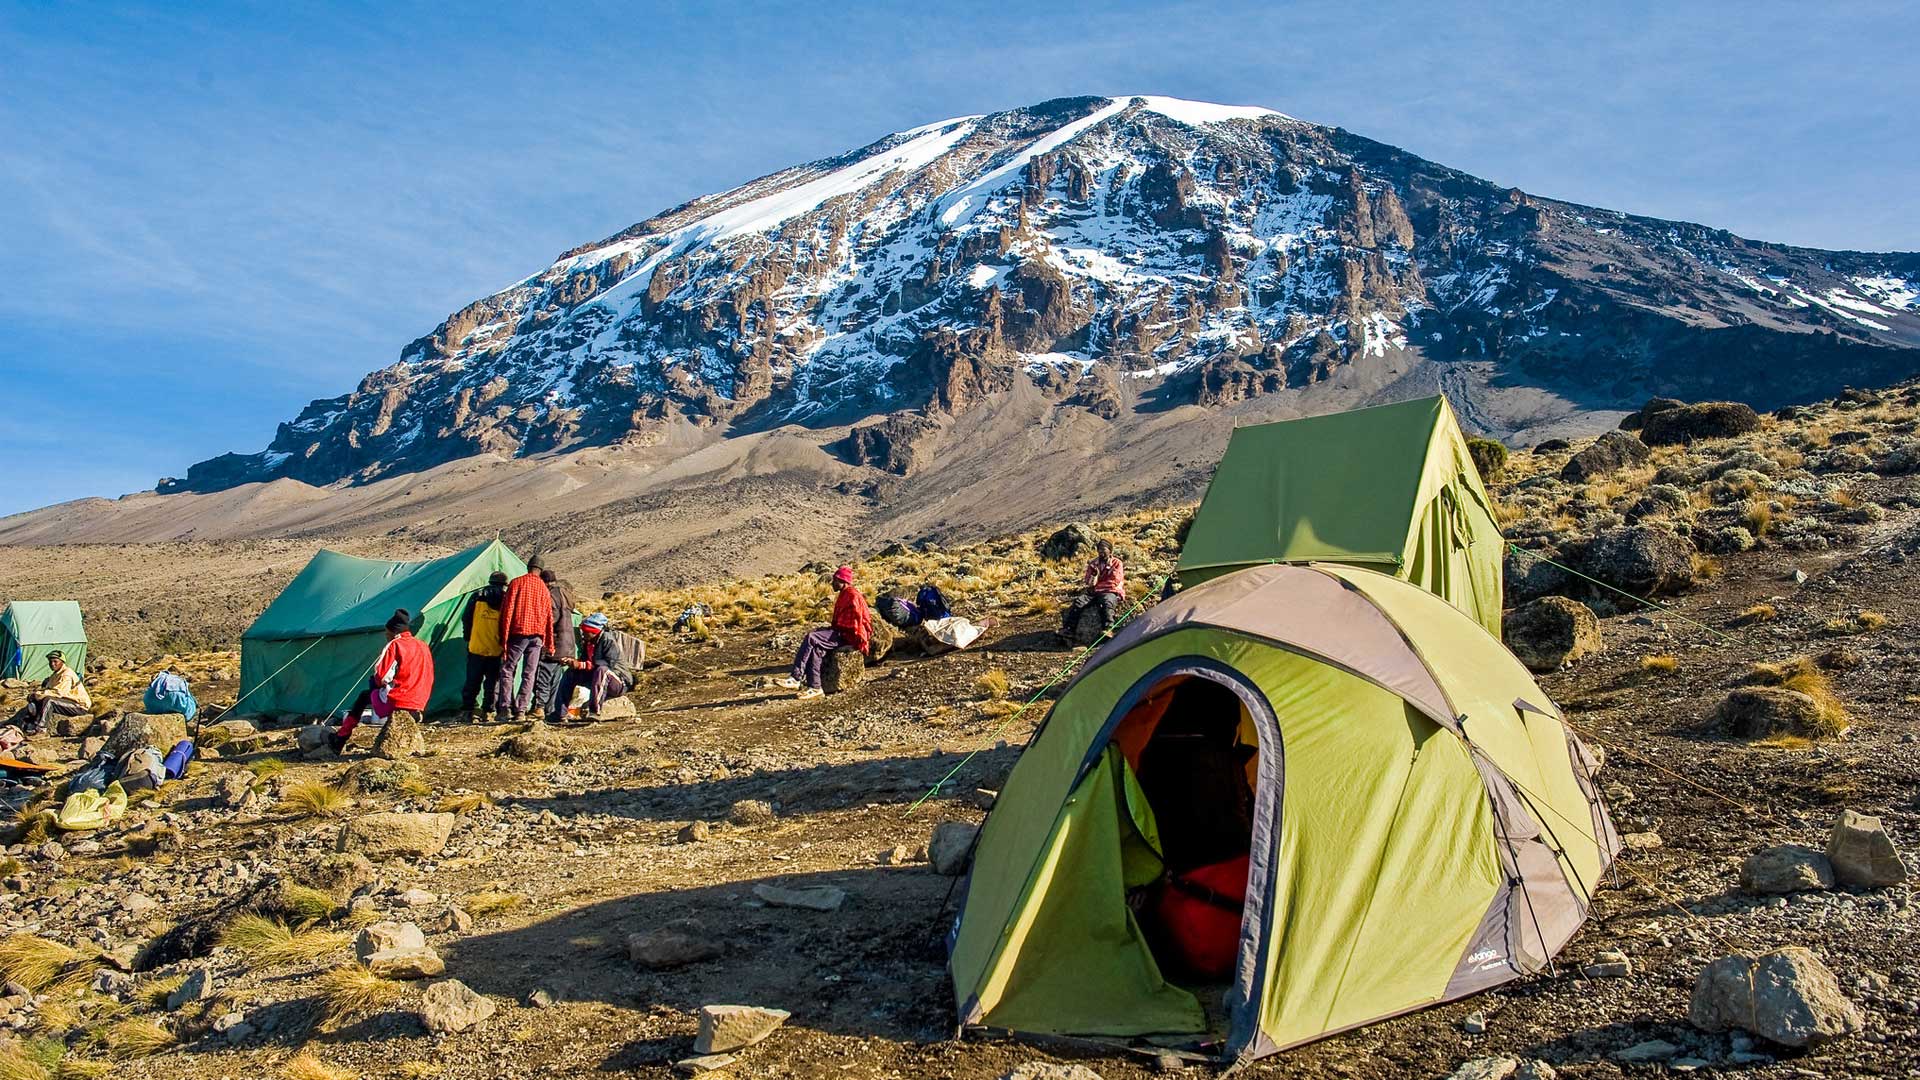 Climb Kilimanjaro via Marangu Route in  6 Days